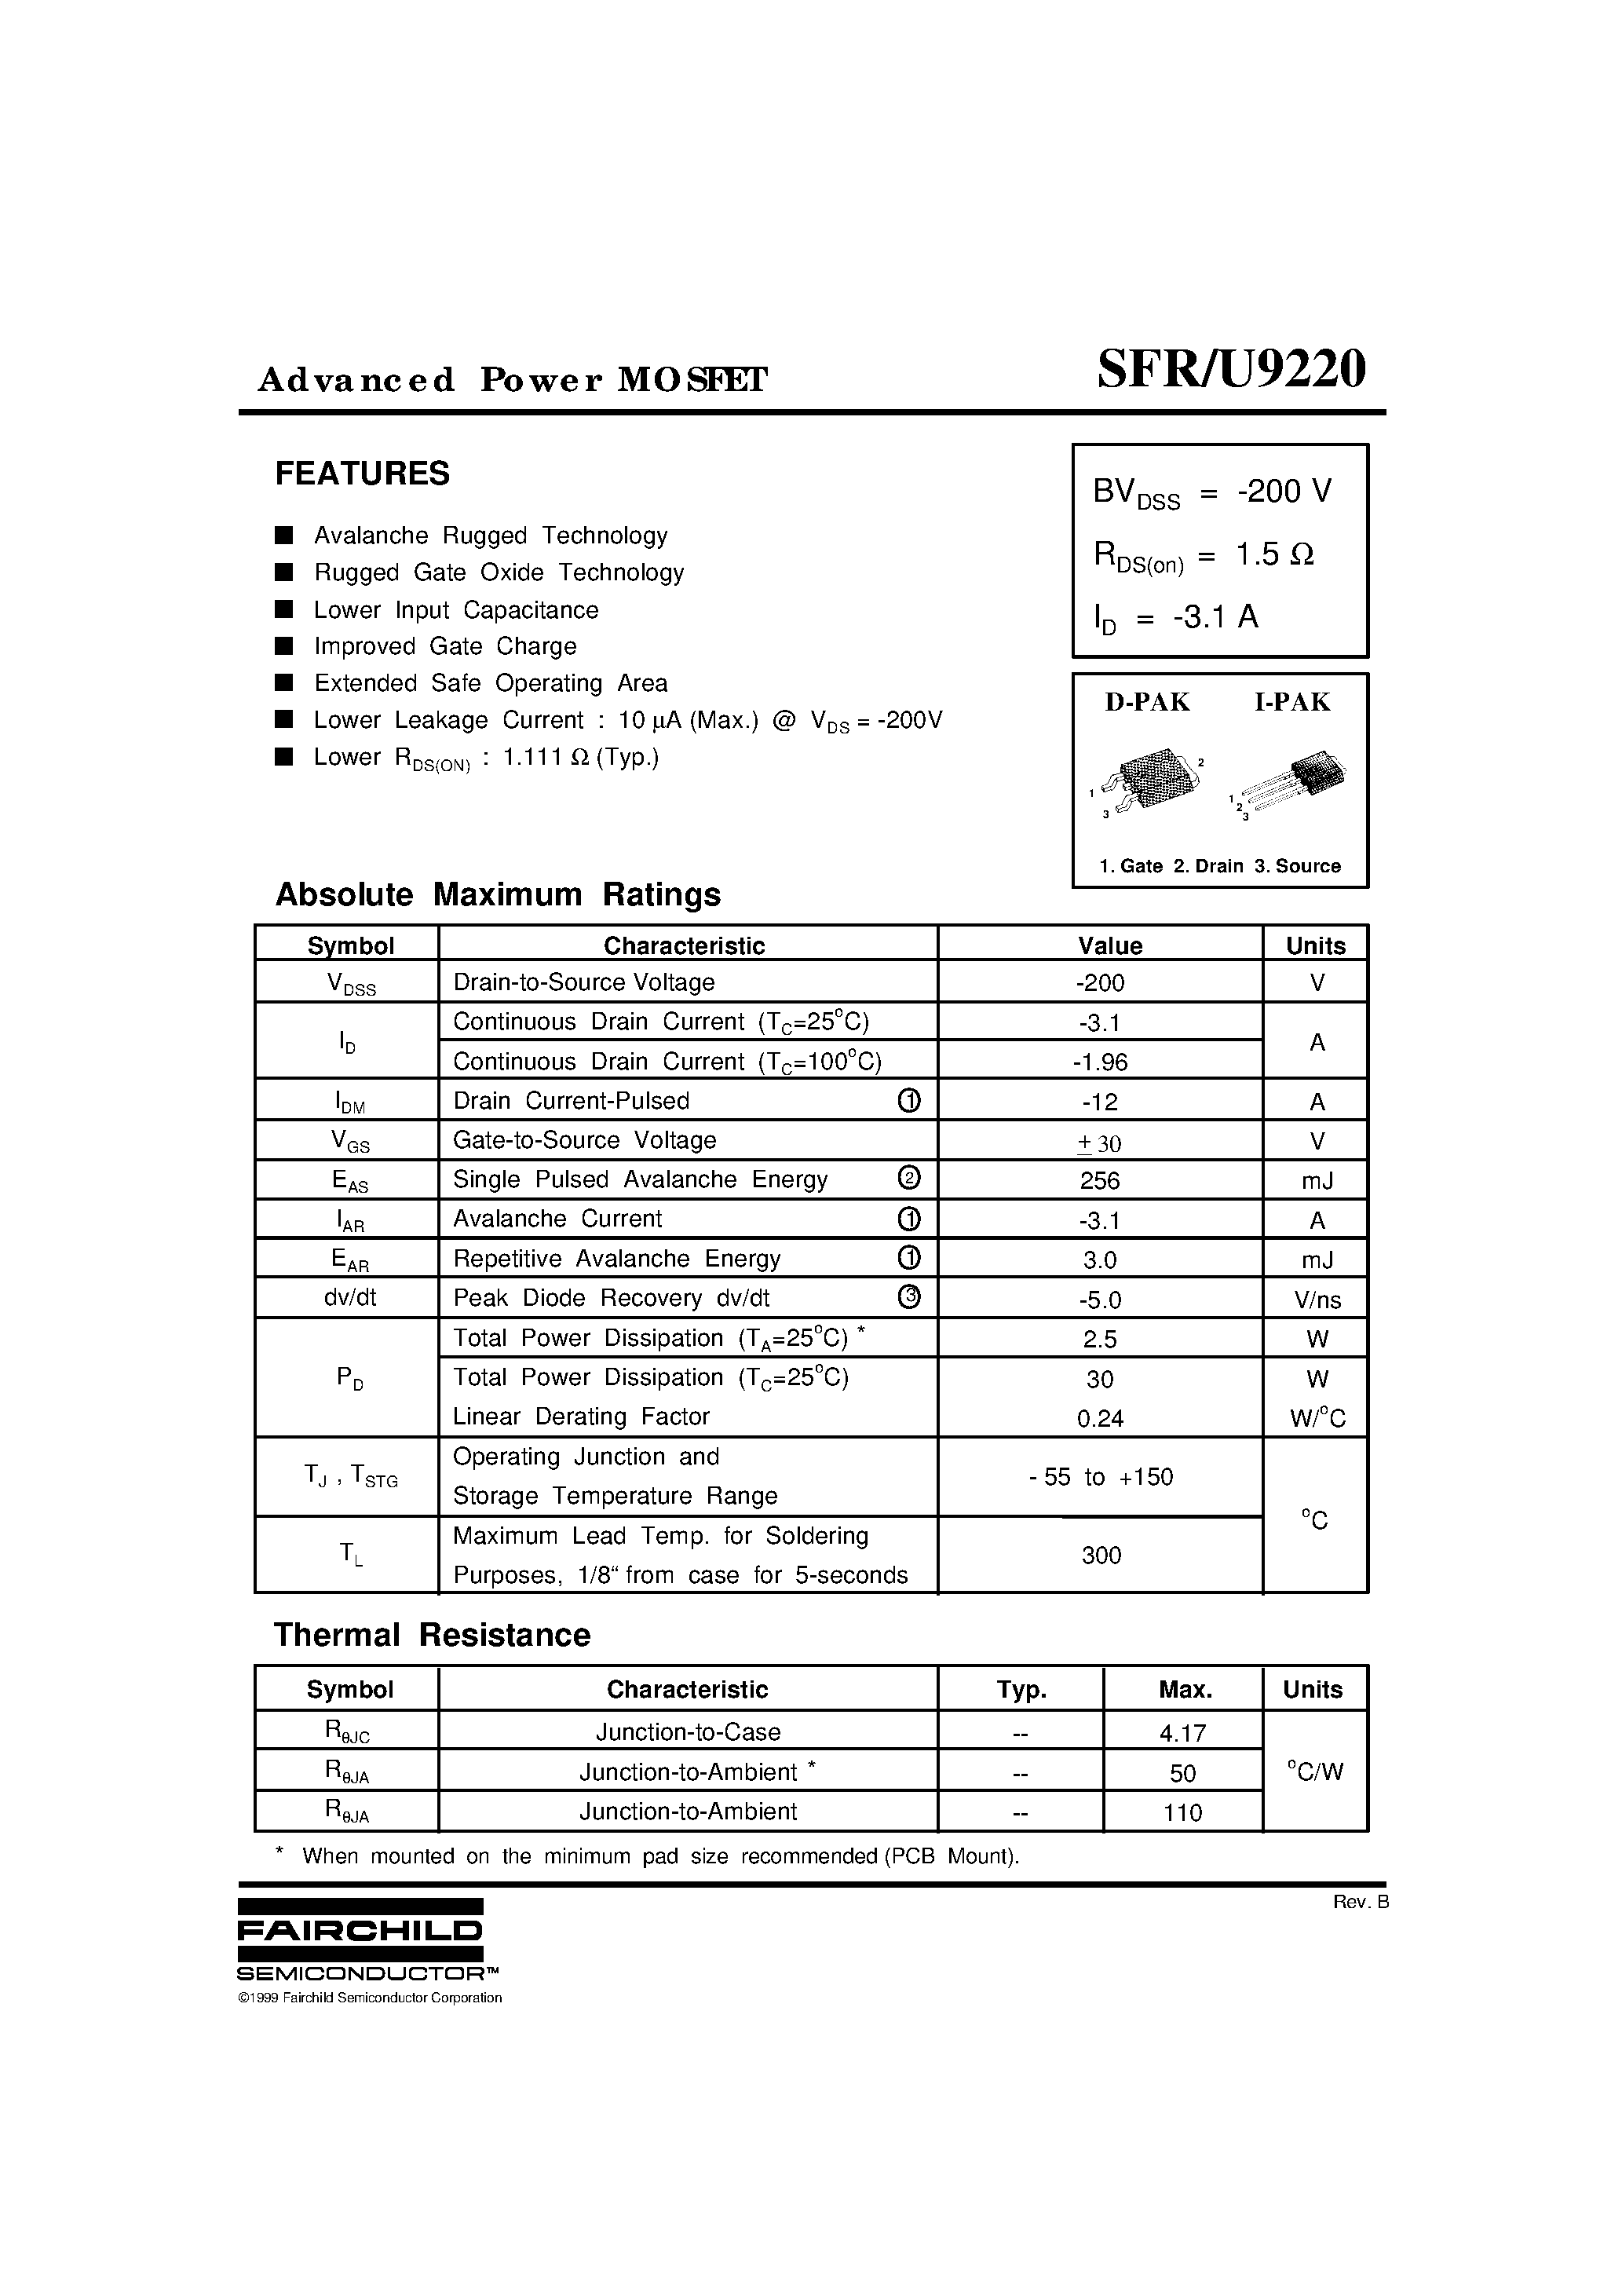 Даташит SFRU9220 - Advanced Power MOSFET страница 1